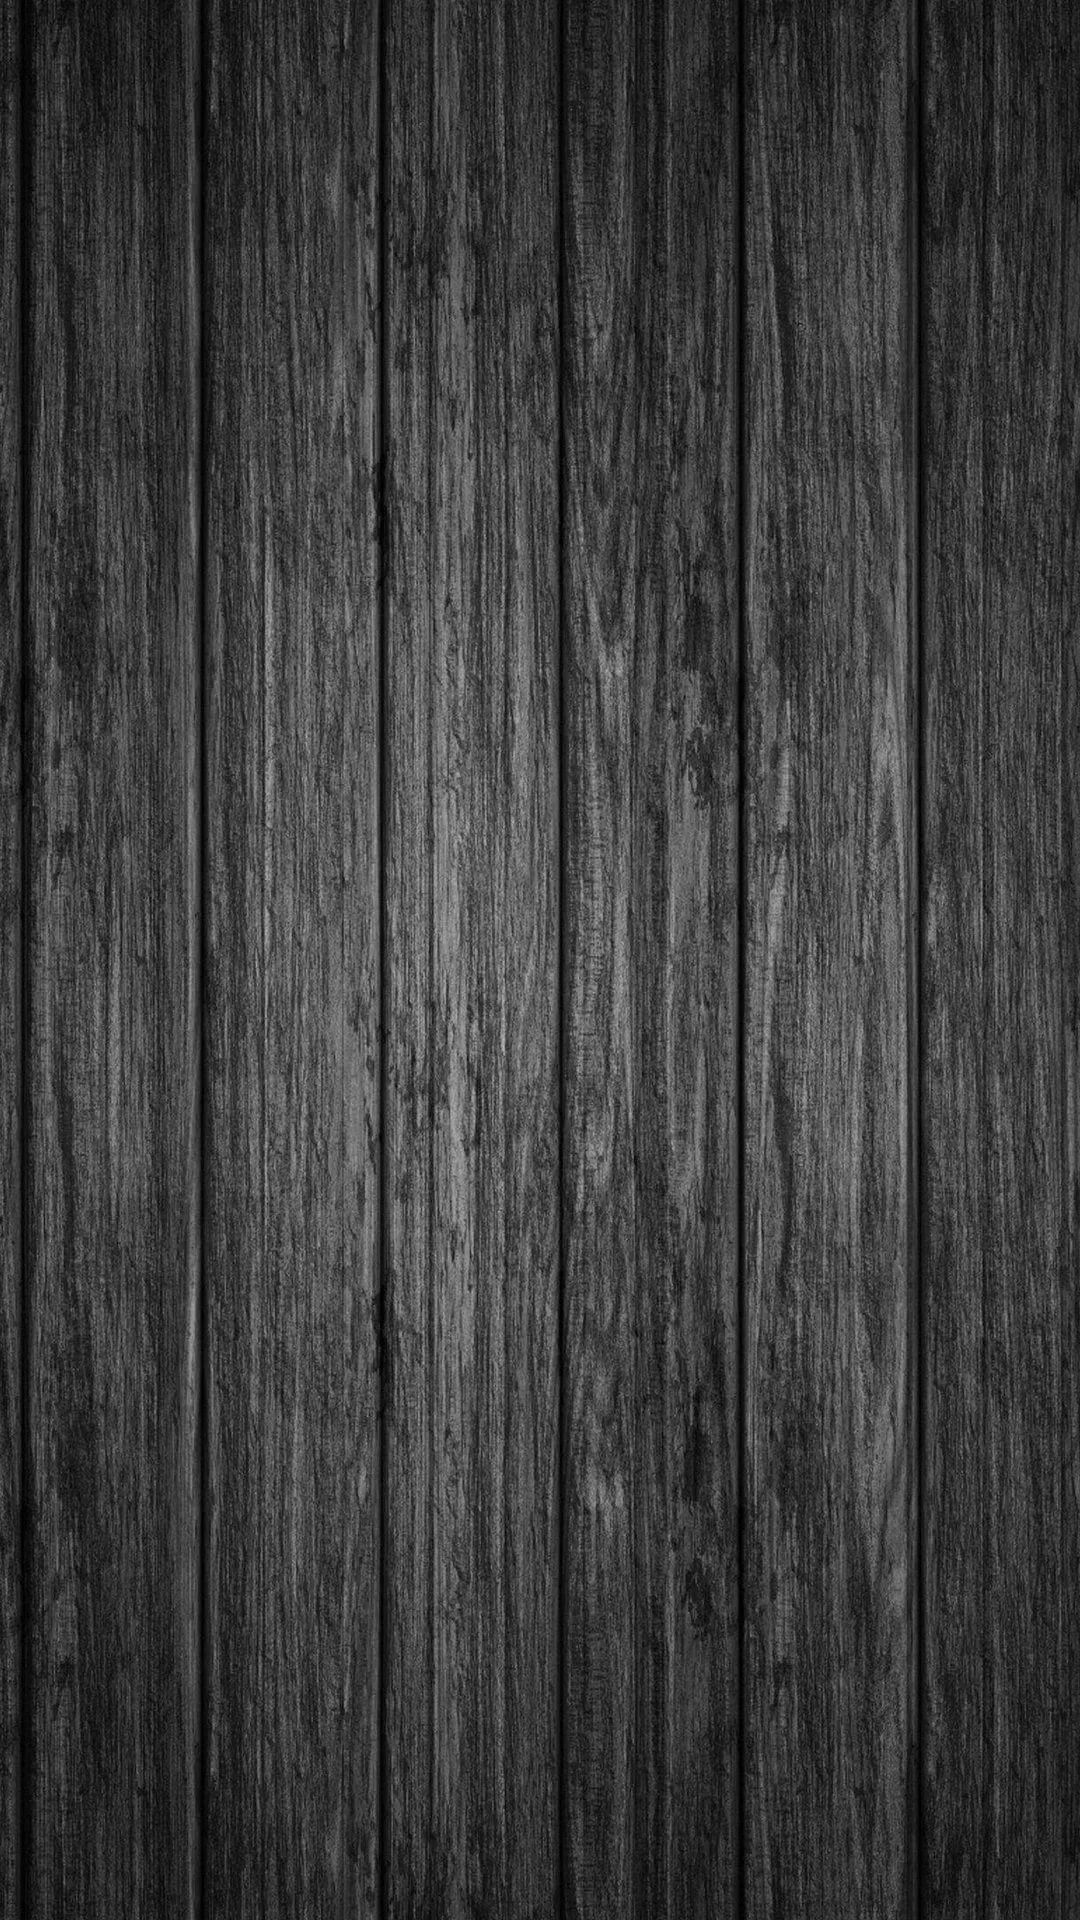 Wood Hd iPhone hd wallpaper